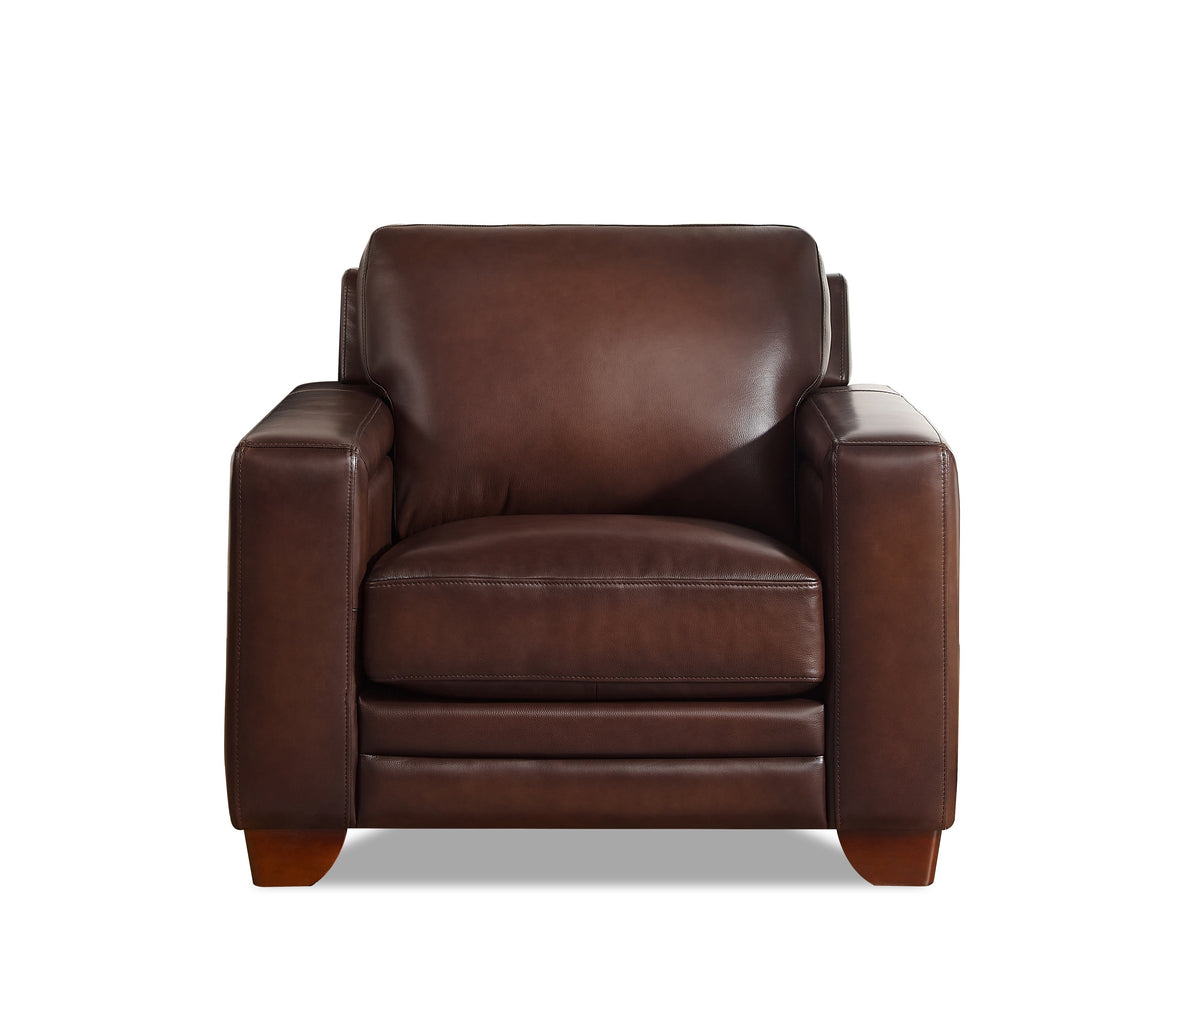 Alice Leather Sofa Collection - MJM Furniture